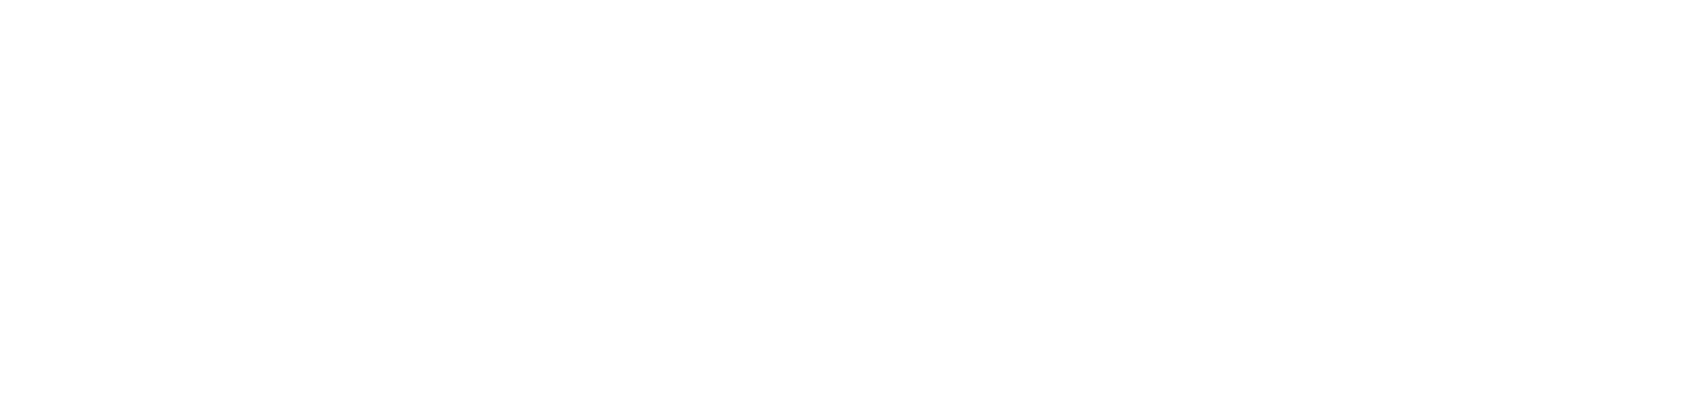 logo-FBT-oficialbr